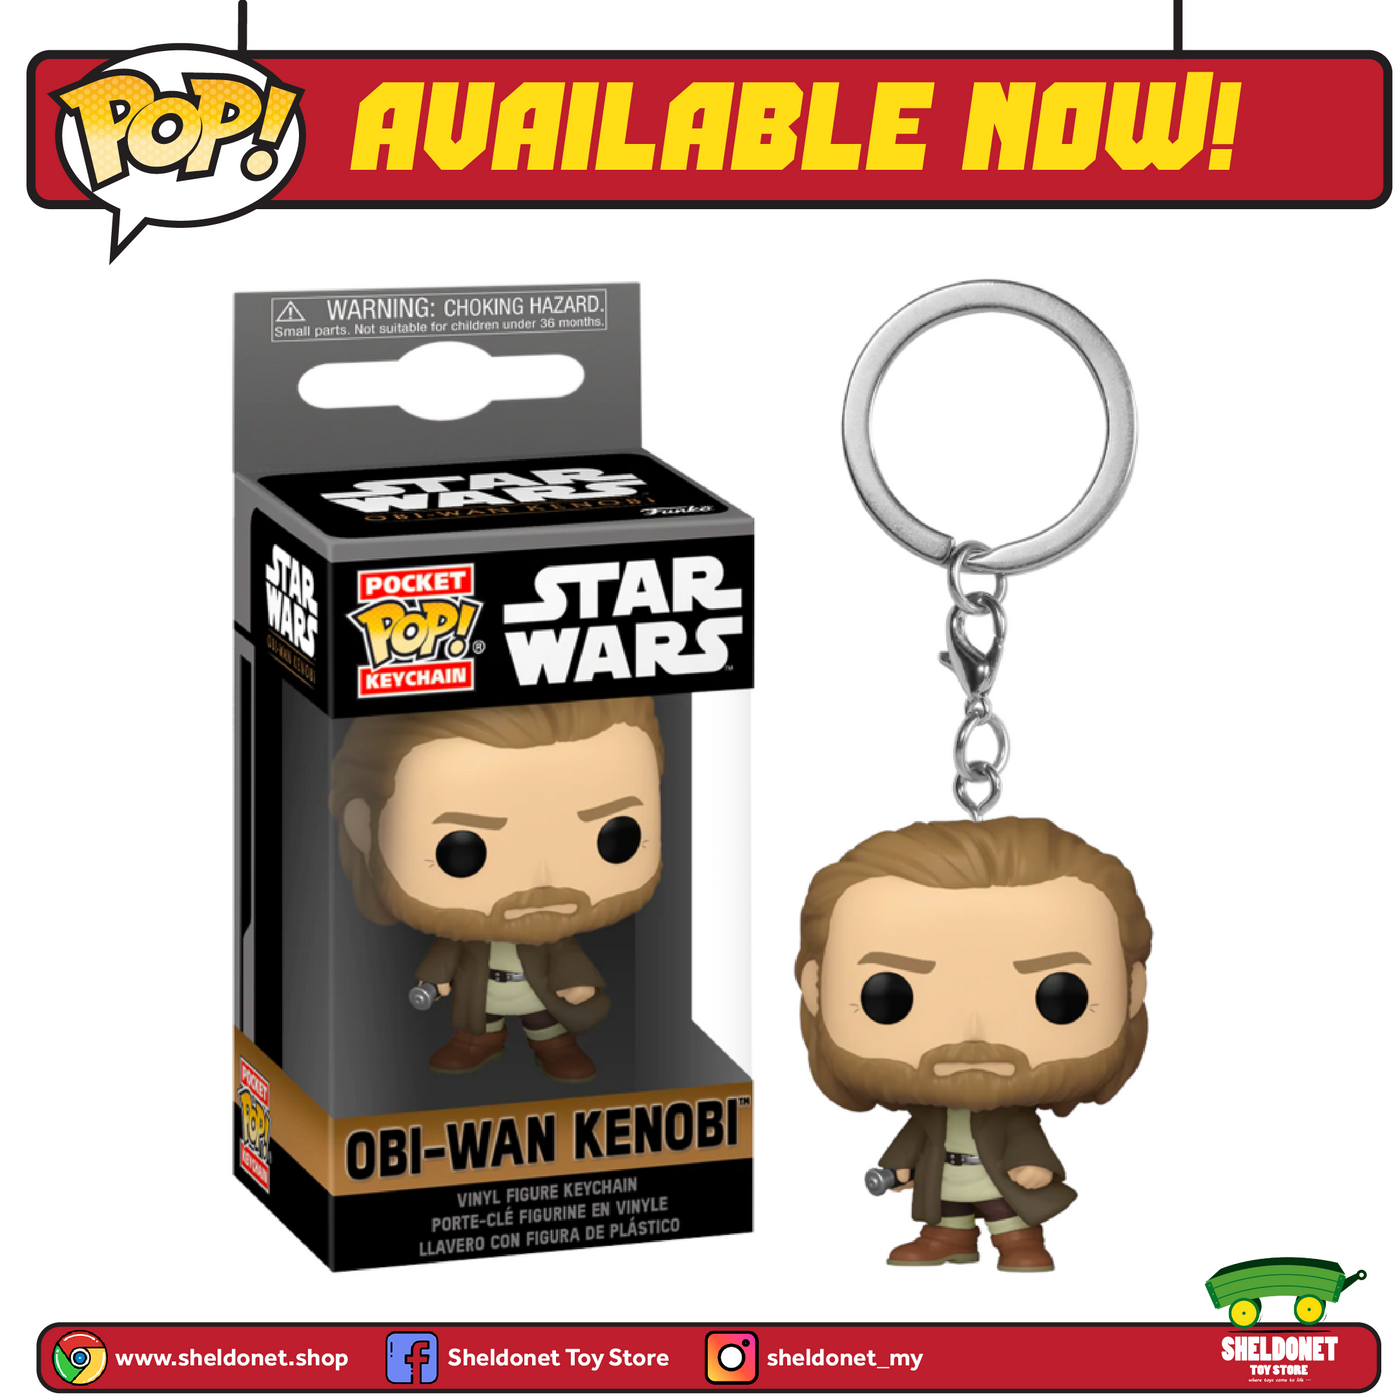 Funko Pocket POP!: Star Wars Obi-Wan Kenobi 4-in Keychain